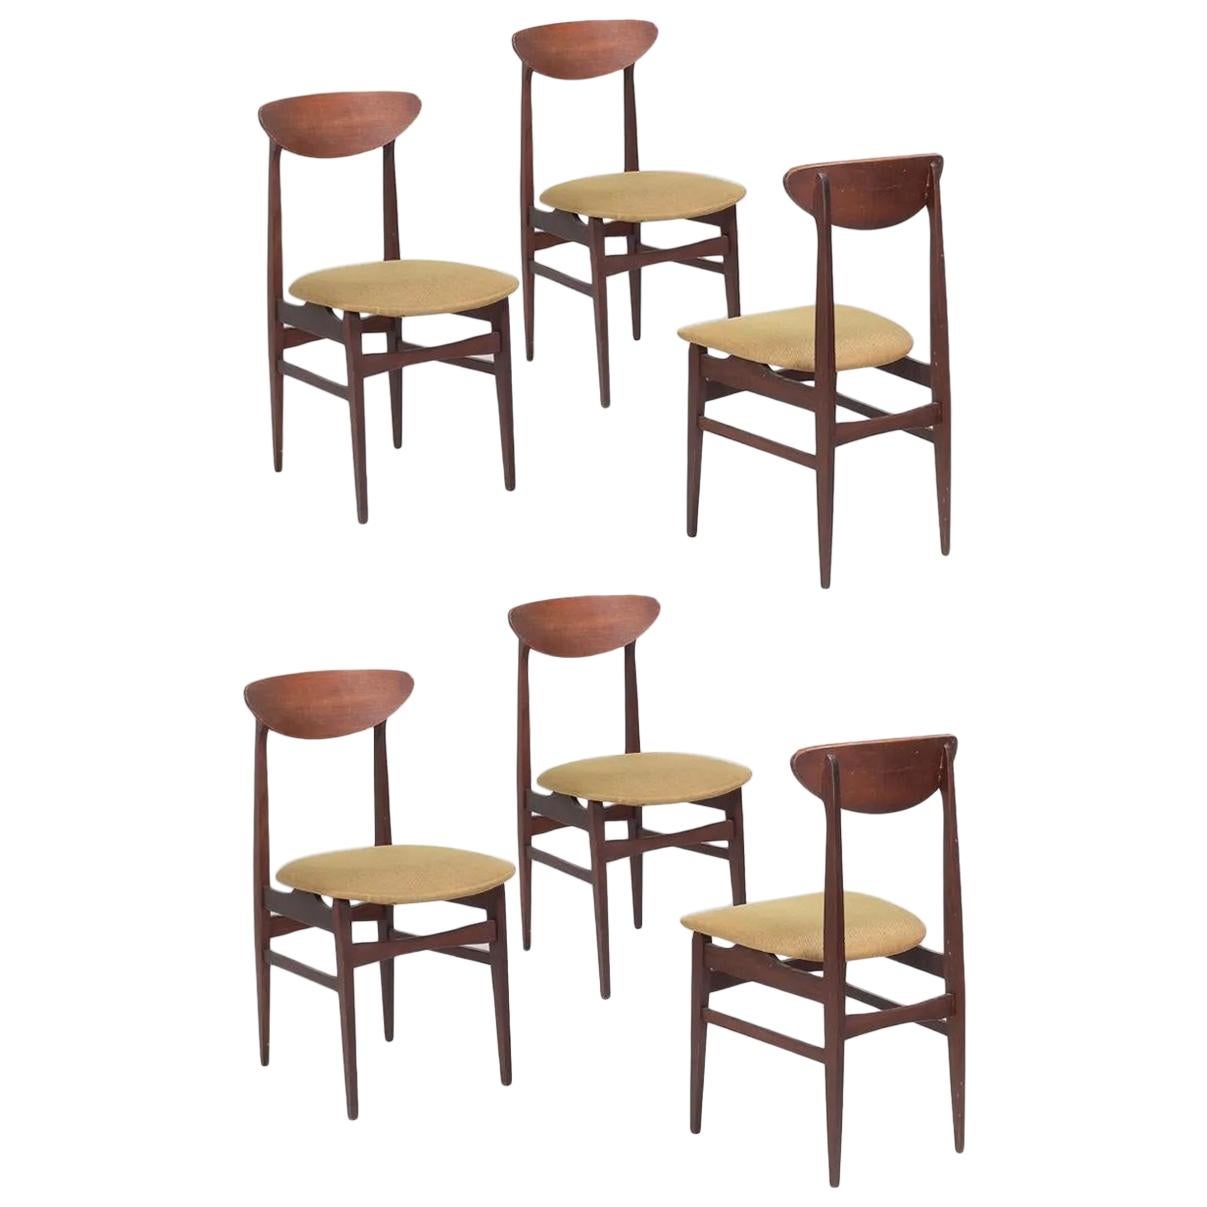 Danish Teak Dining Chairs, set of 6